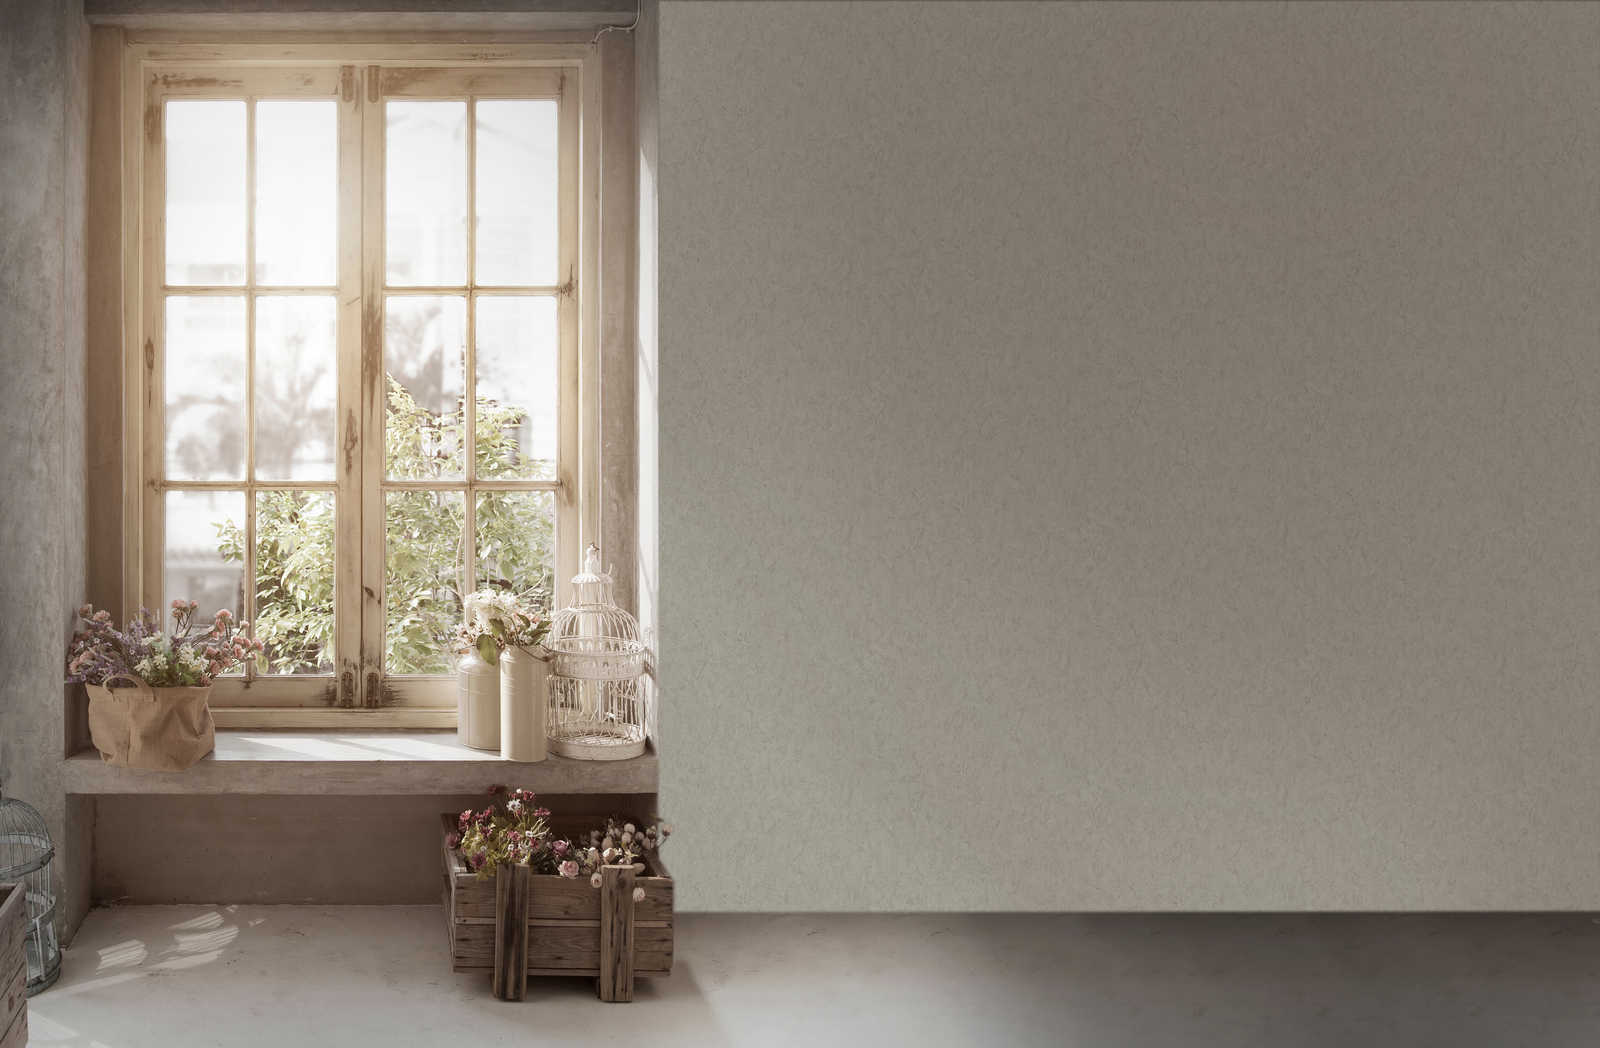             Plain wallpaper with texture effect & mottled design - grey, beige
        